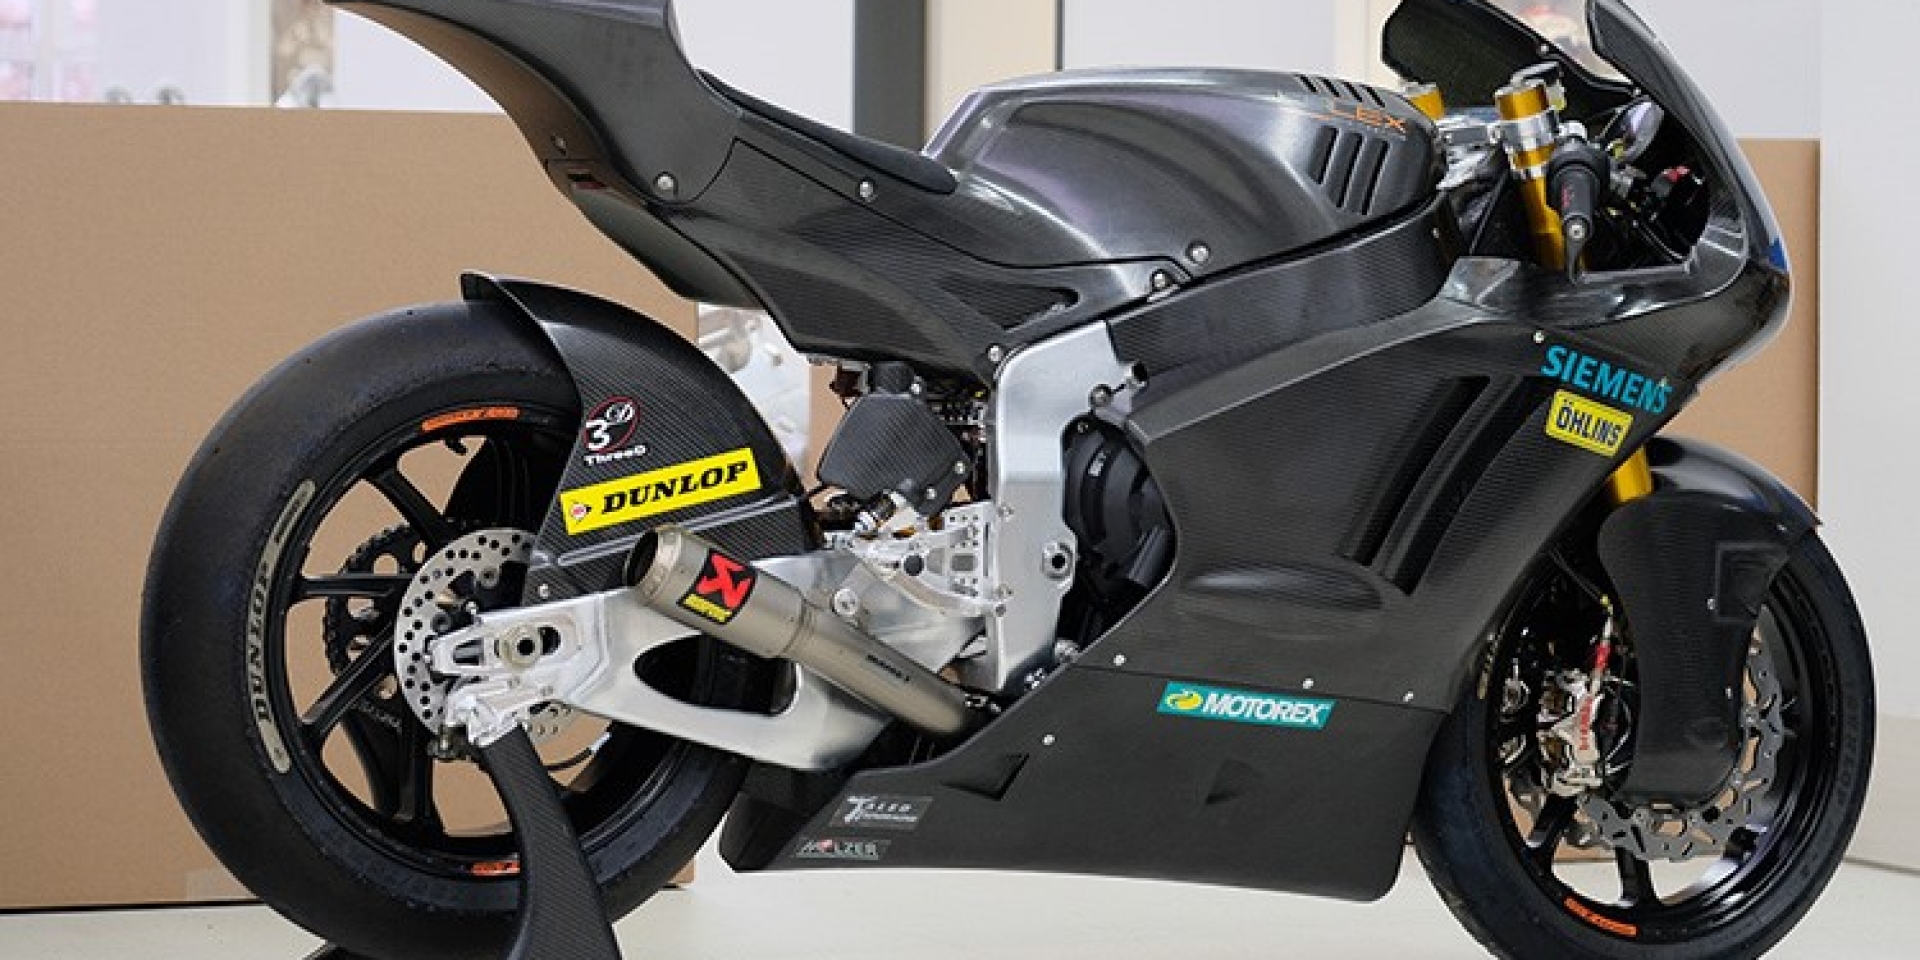 Moto2 首輛三缸引擎賽車曝光